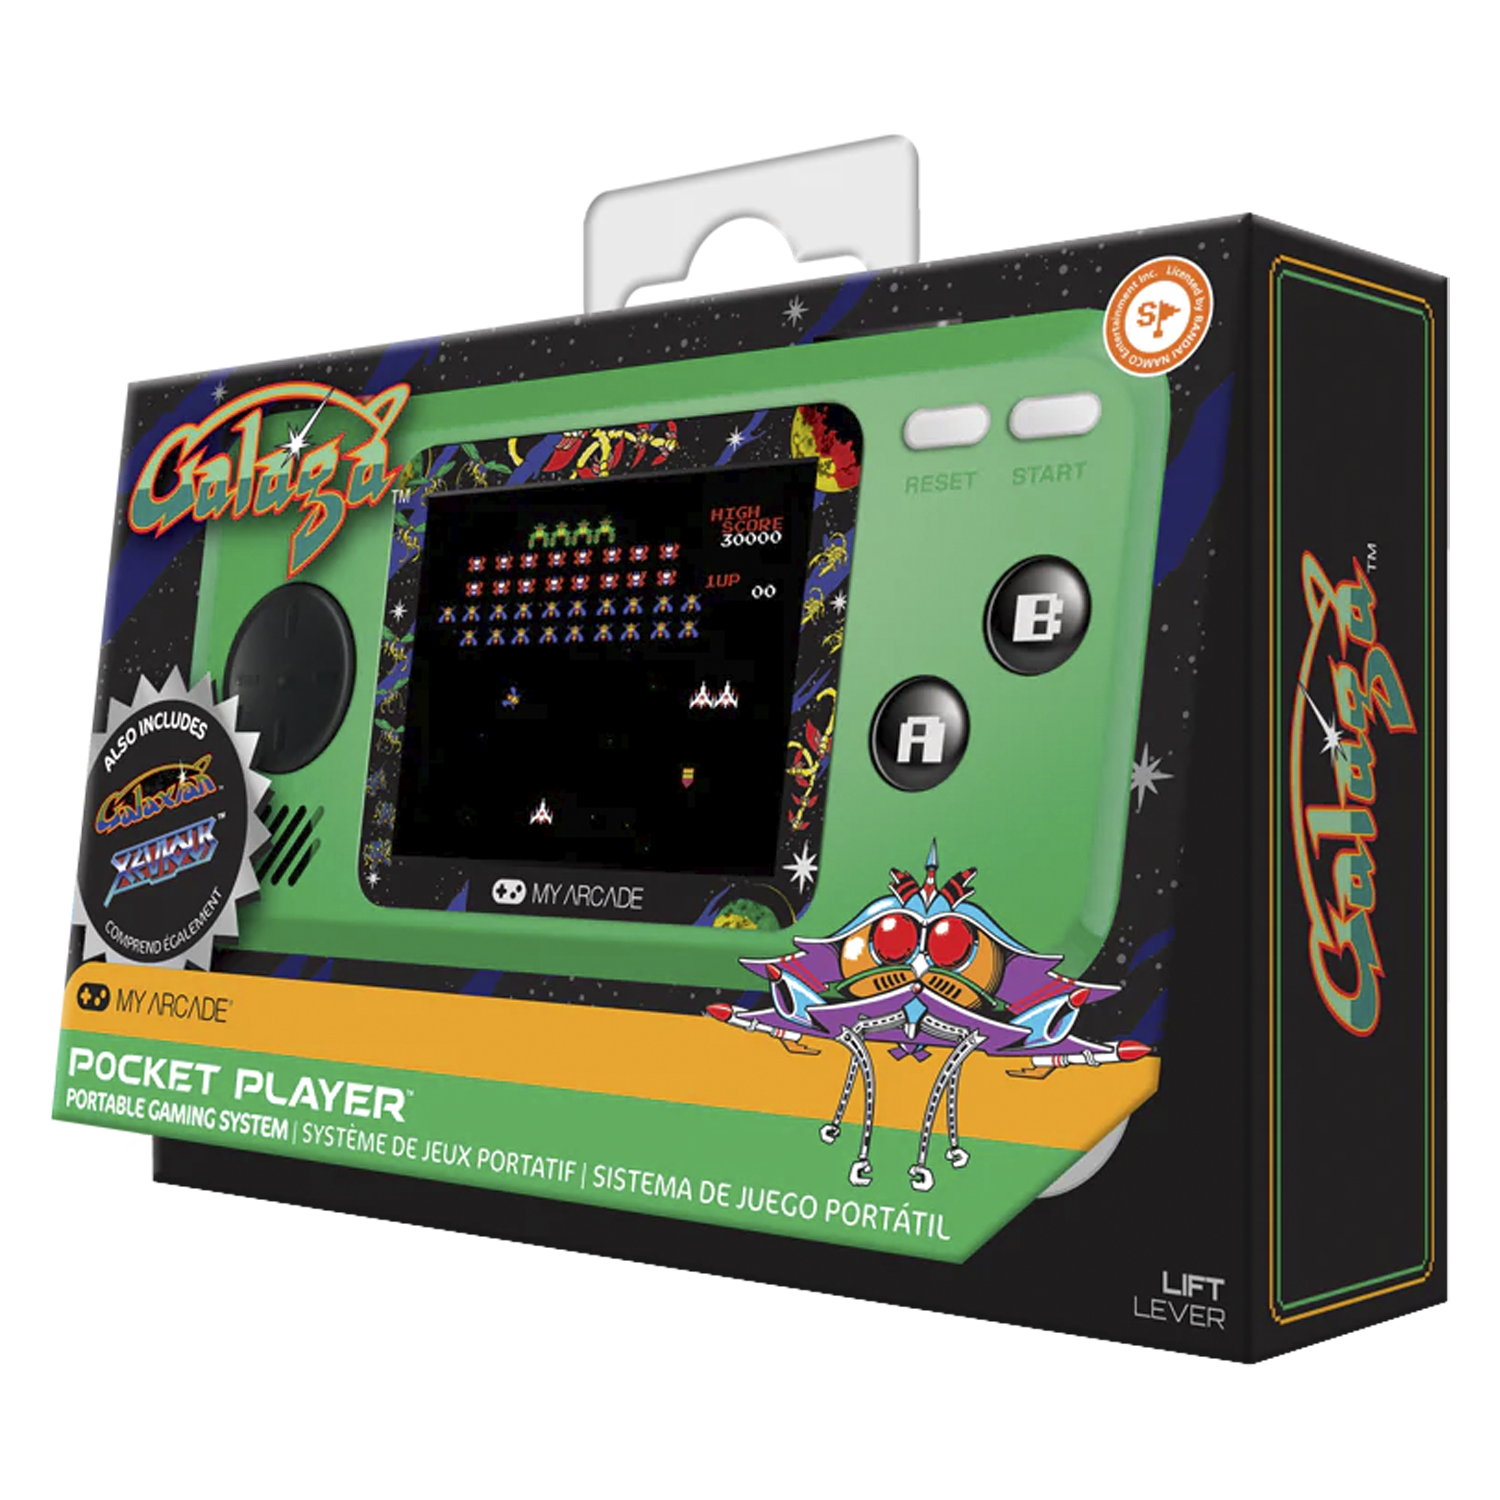 Console My Arcade Galaga Pocket Player (DGUNL-3244)